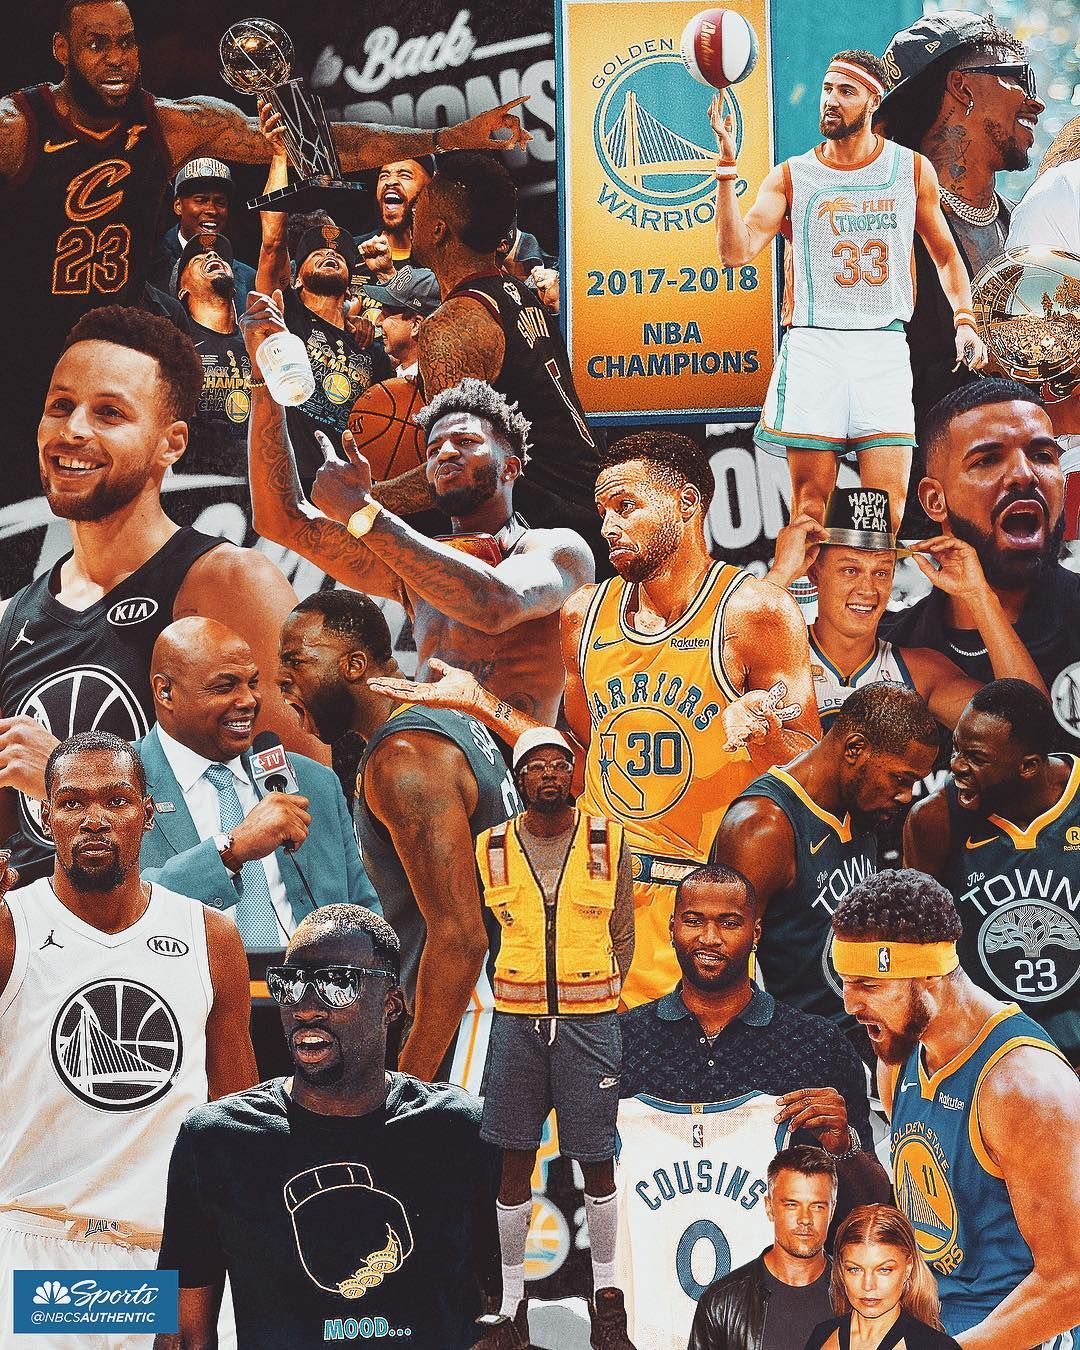 Kobe Bryant NBA Basketball Star Action Photo Collage